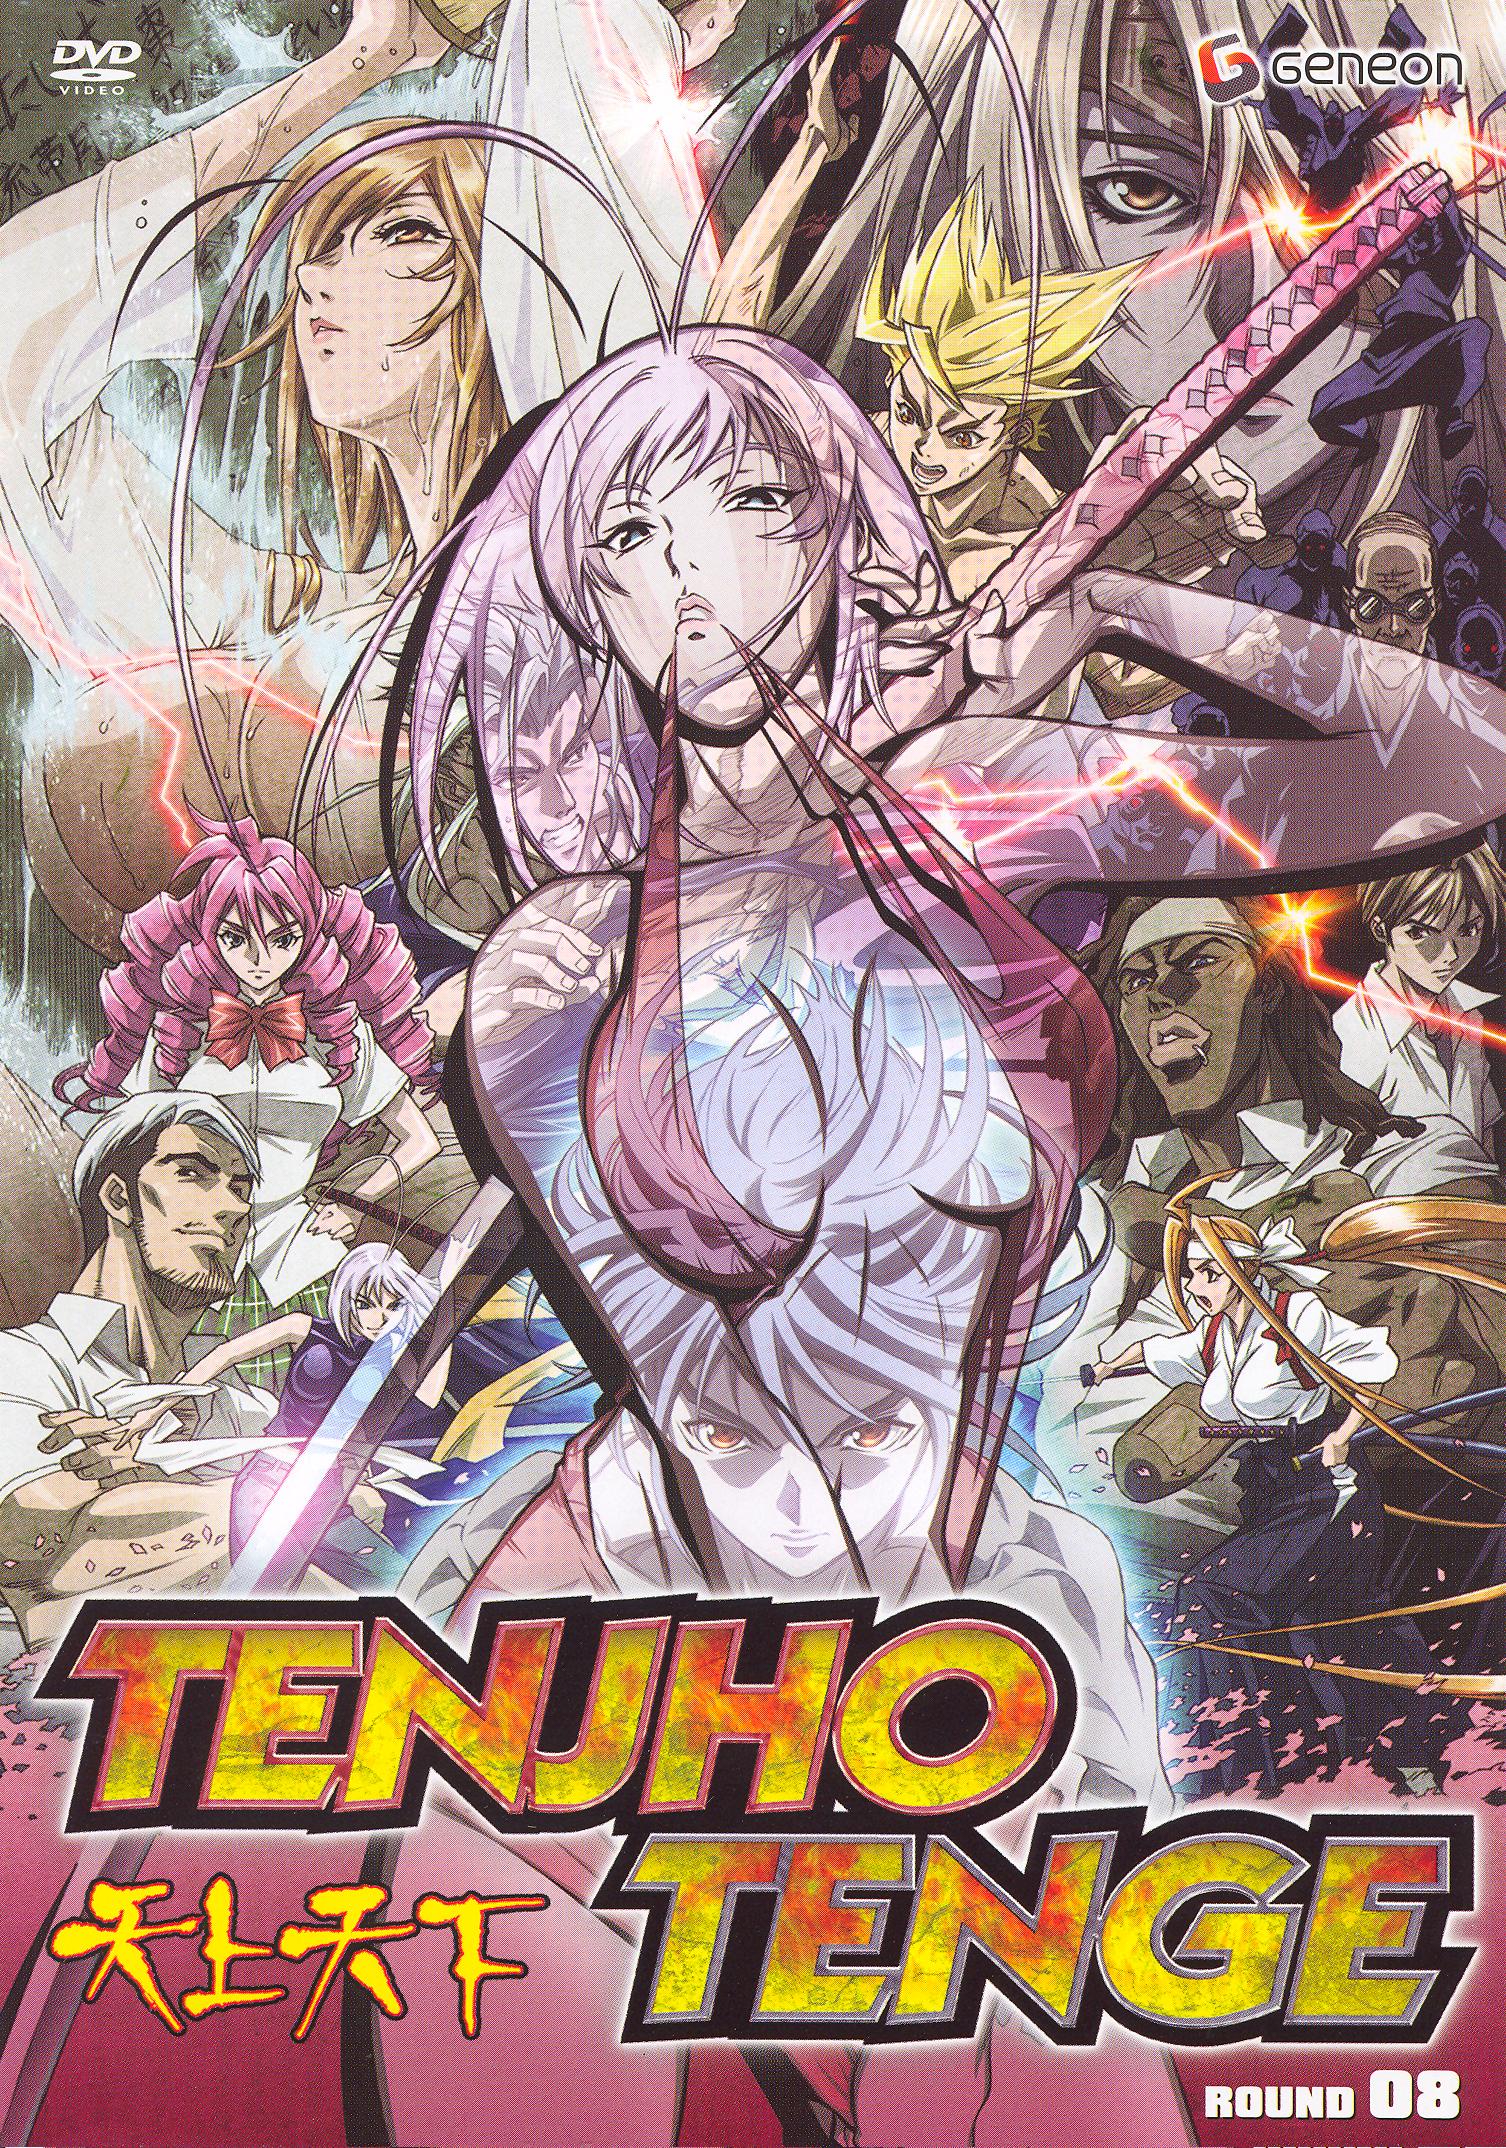  Tenjho Tenge, Vol. 2 - Round 2 [DVD] : Movies & TV